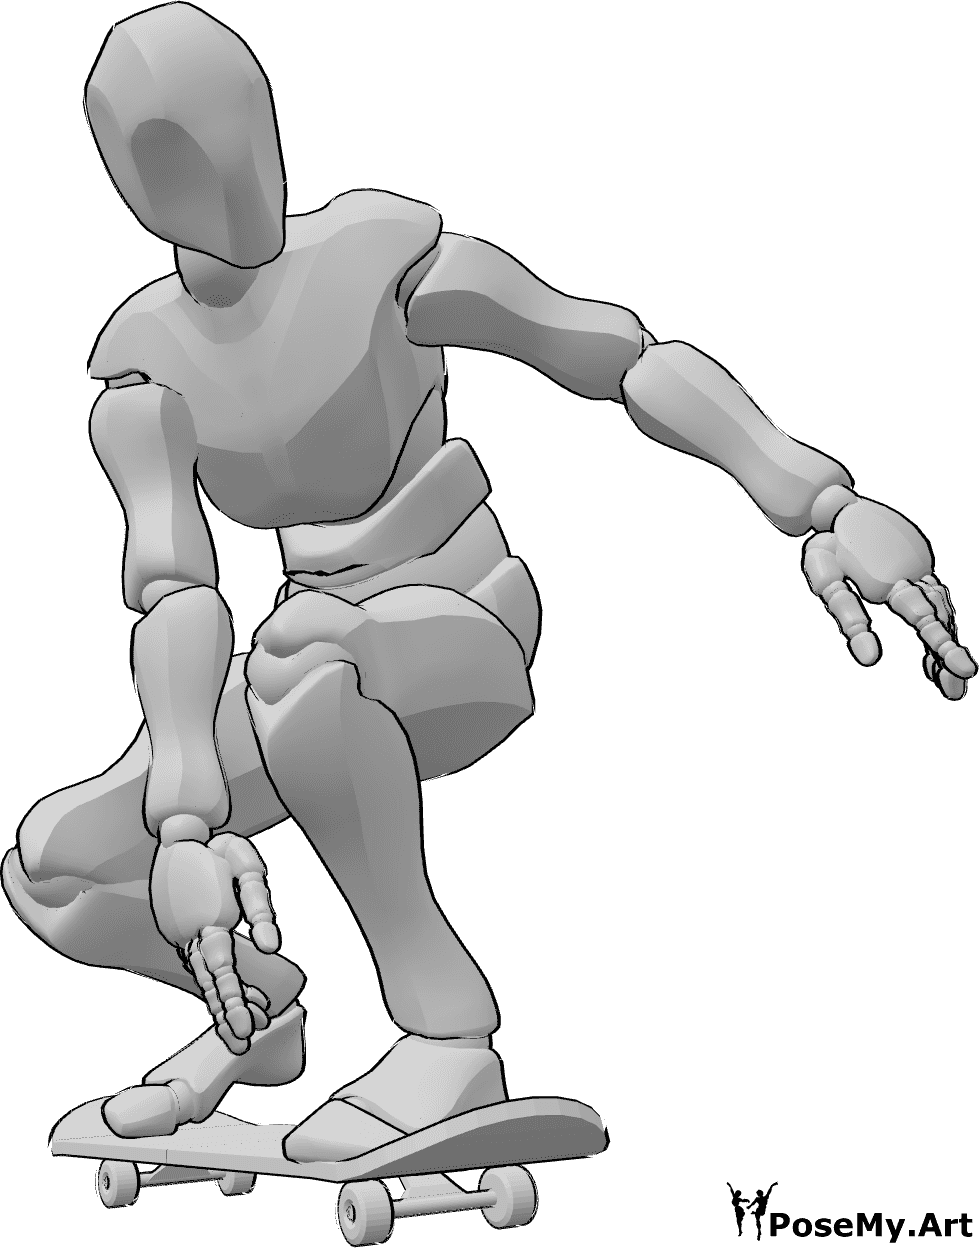 Referencia de poses- Postura de monopatín agachado - Varón en monopatín, rueda sobre el monopatín agachado